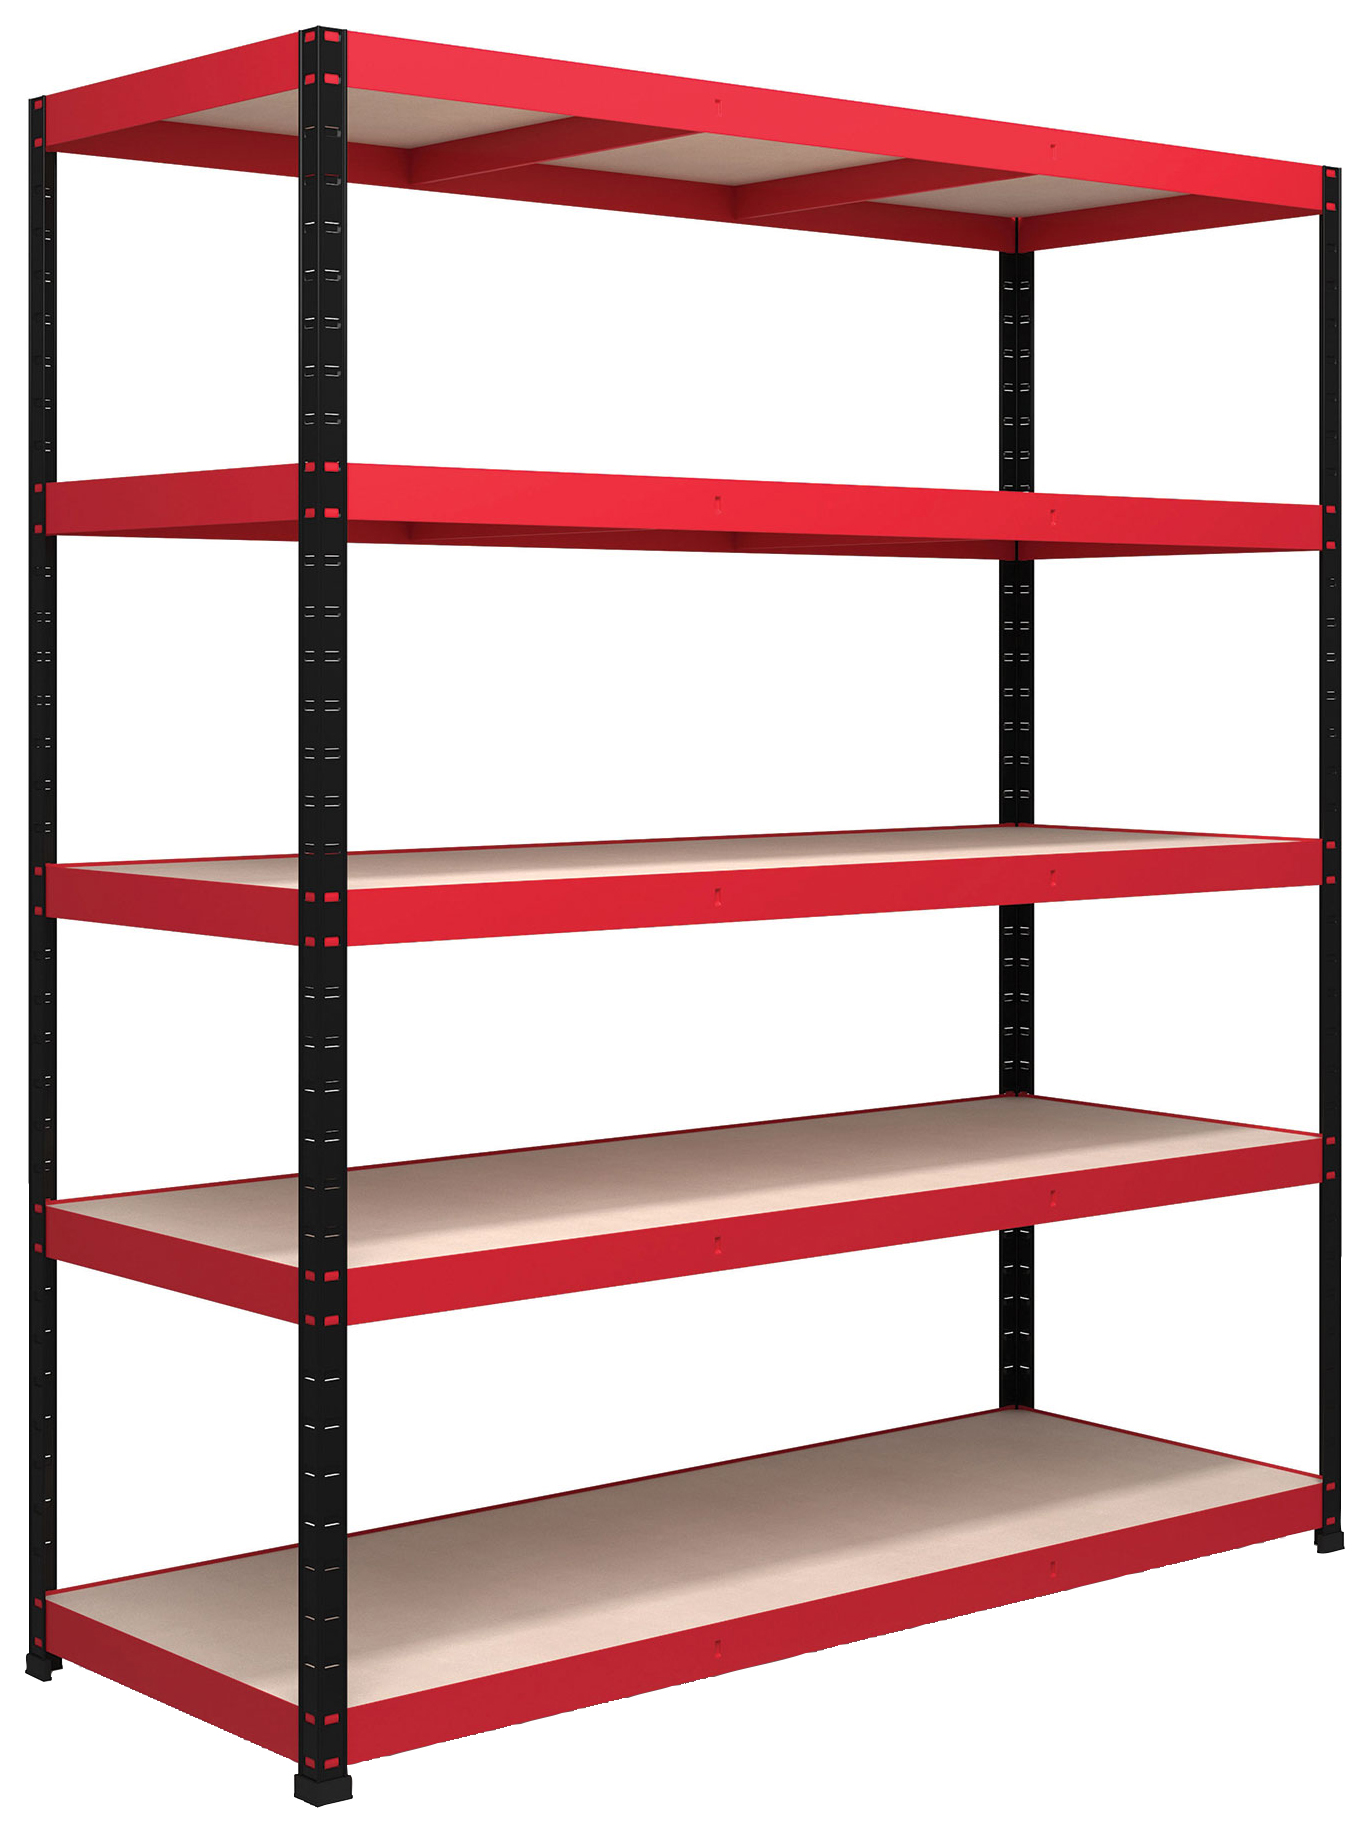 Rb Boss Shelf Kit 5 Wood Shelves - 1800 x 1600 x 600mm 250kg Udl